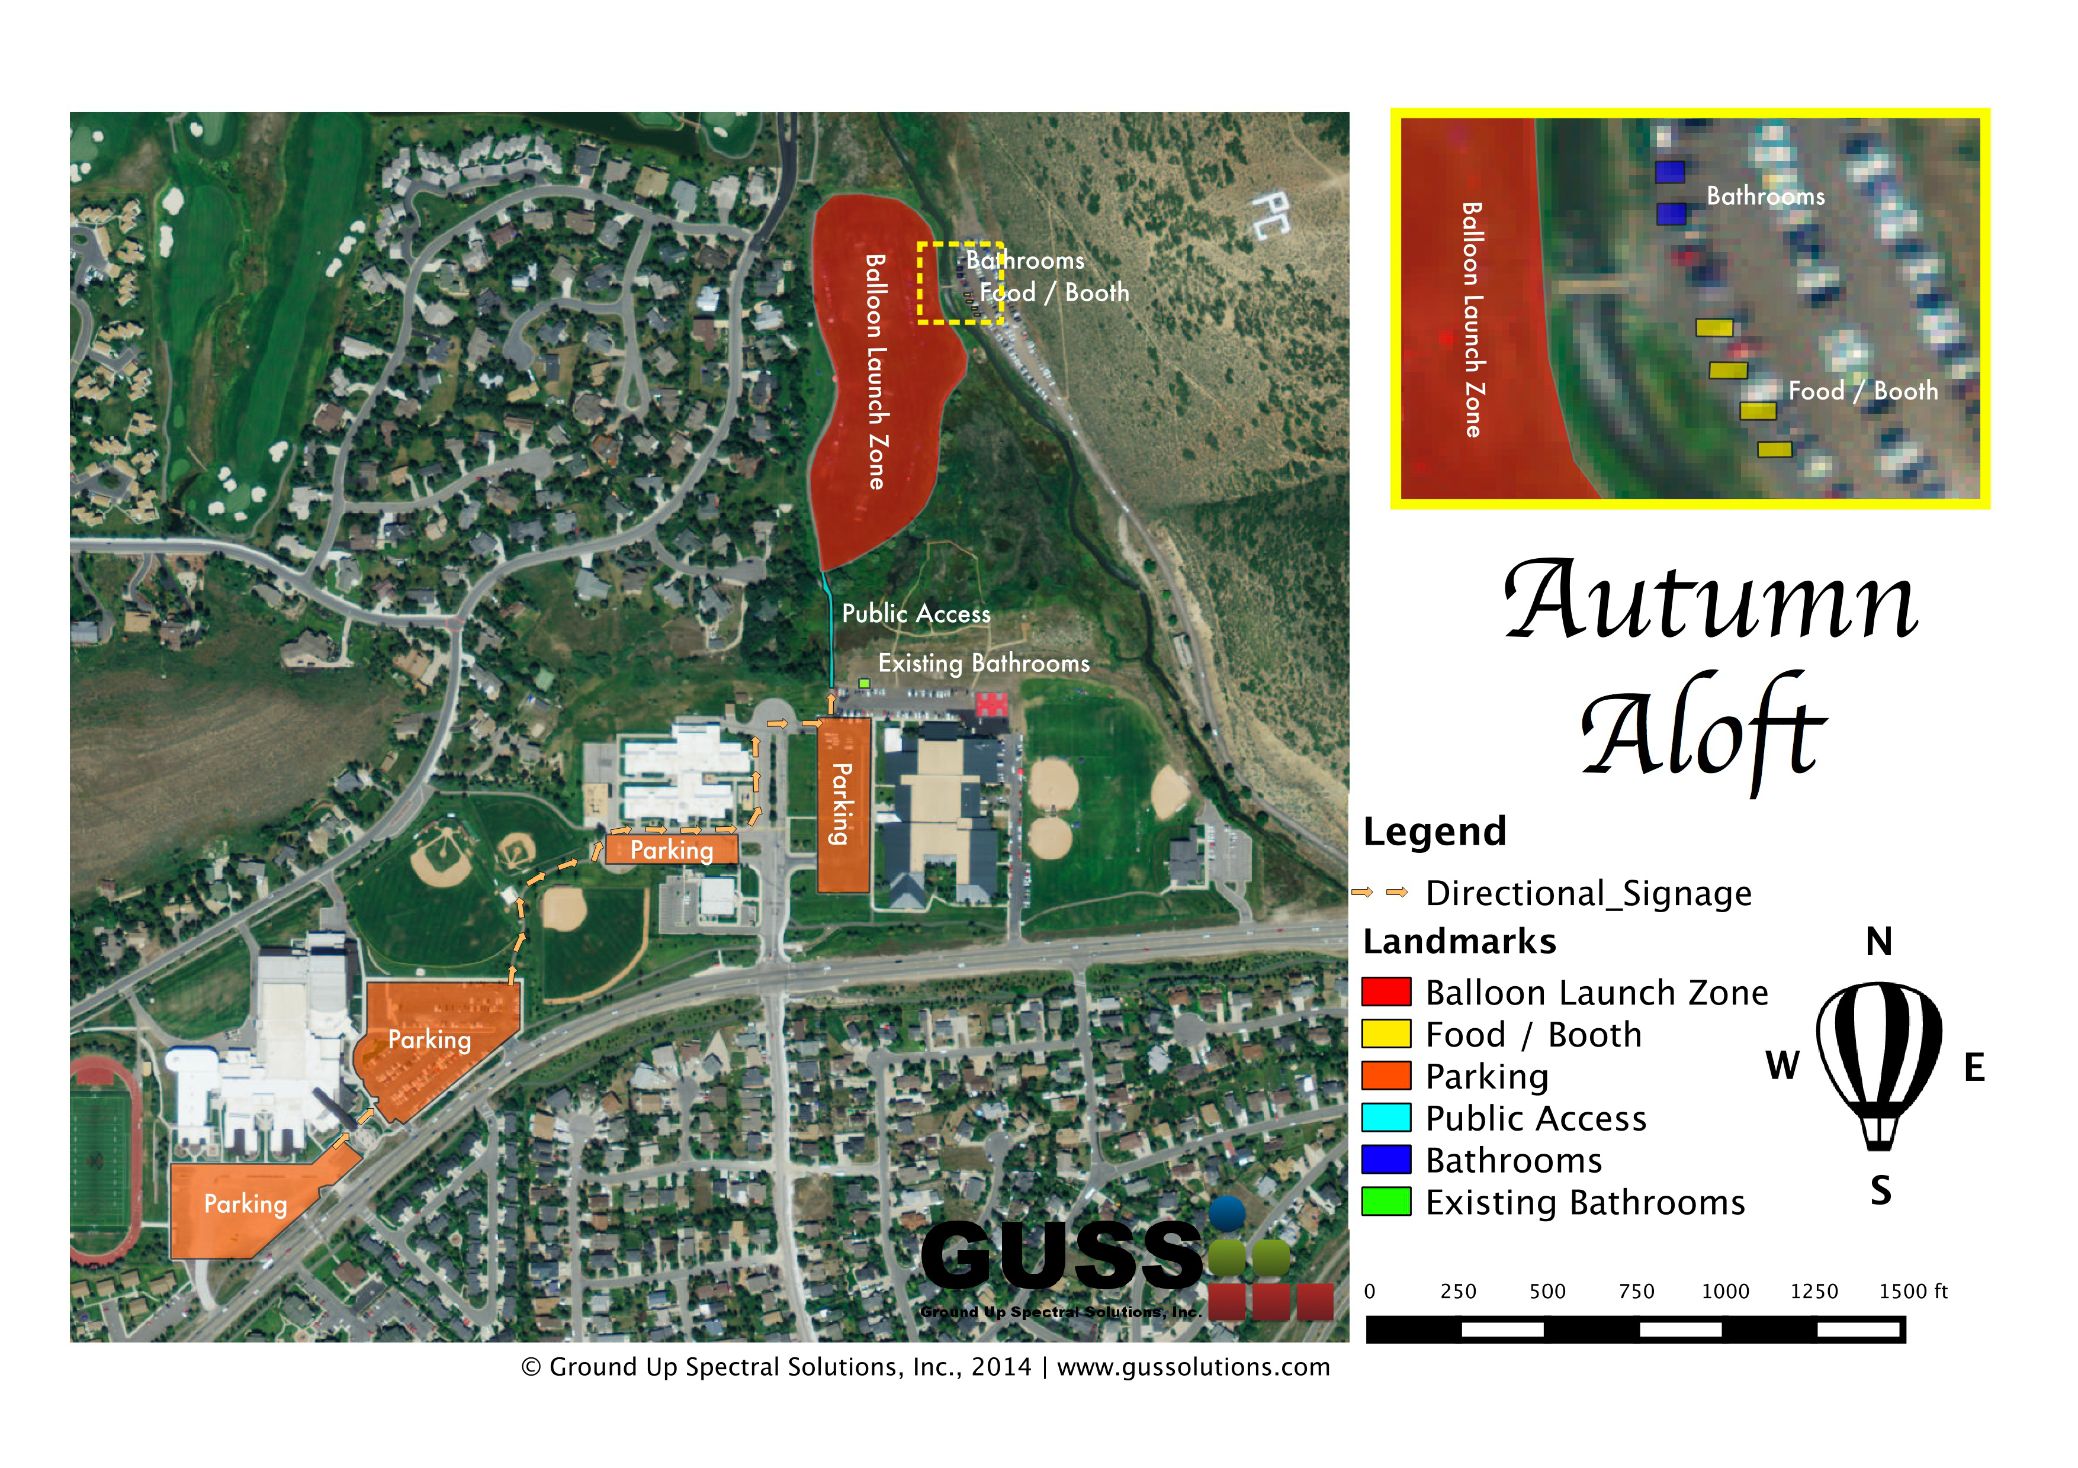 Autumn Aloft event map